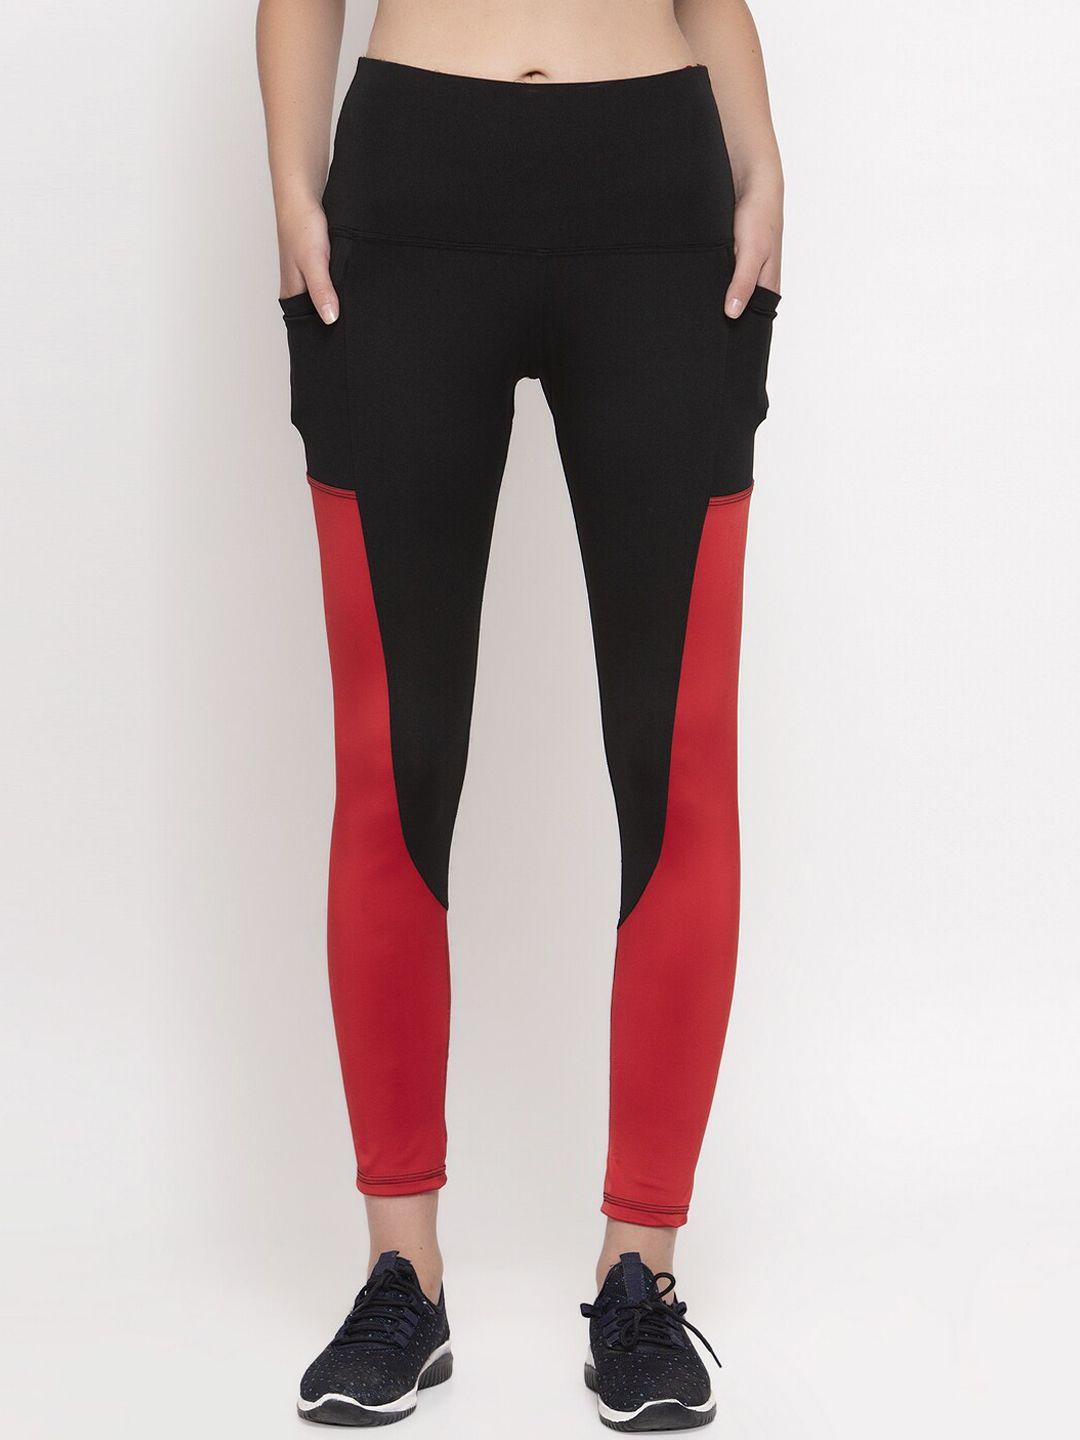 cukoo-women-red-&-black-colourblocked-tights